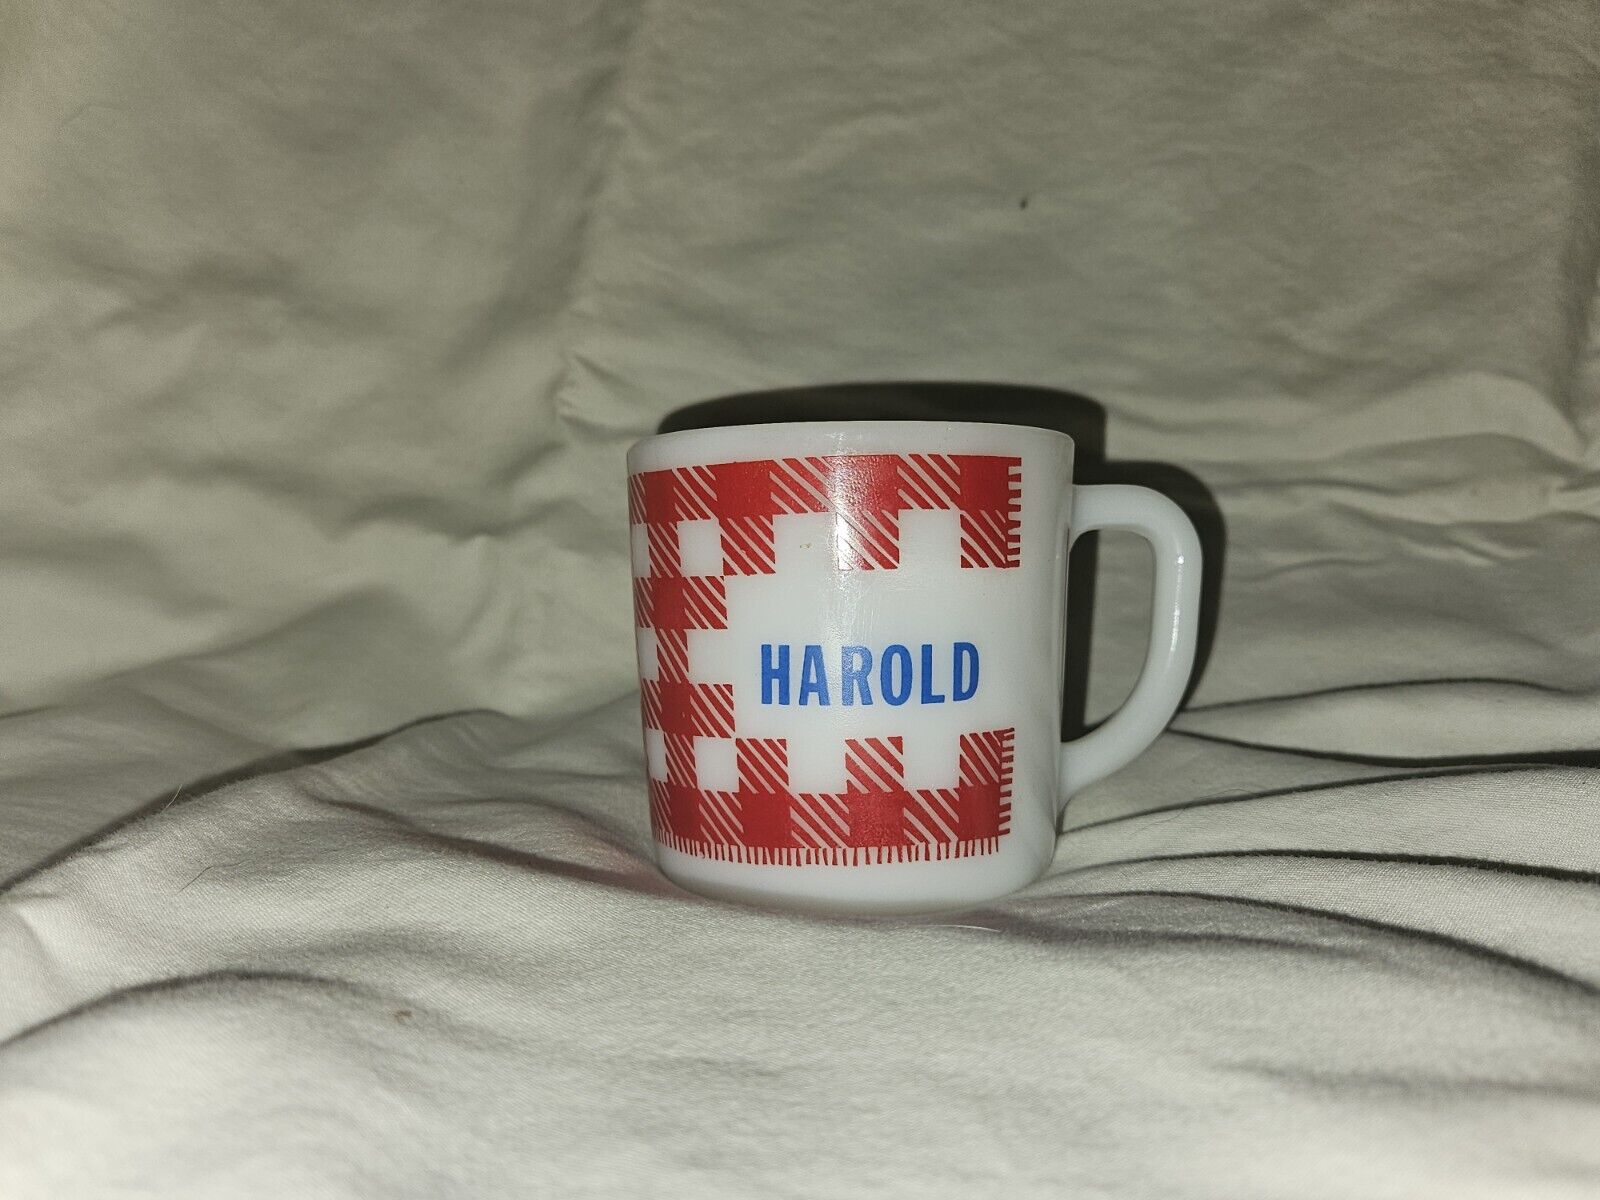 Vintage Westfield Milk Glass Coffee Cup Mug With Name Harold Red Gingham Plaid